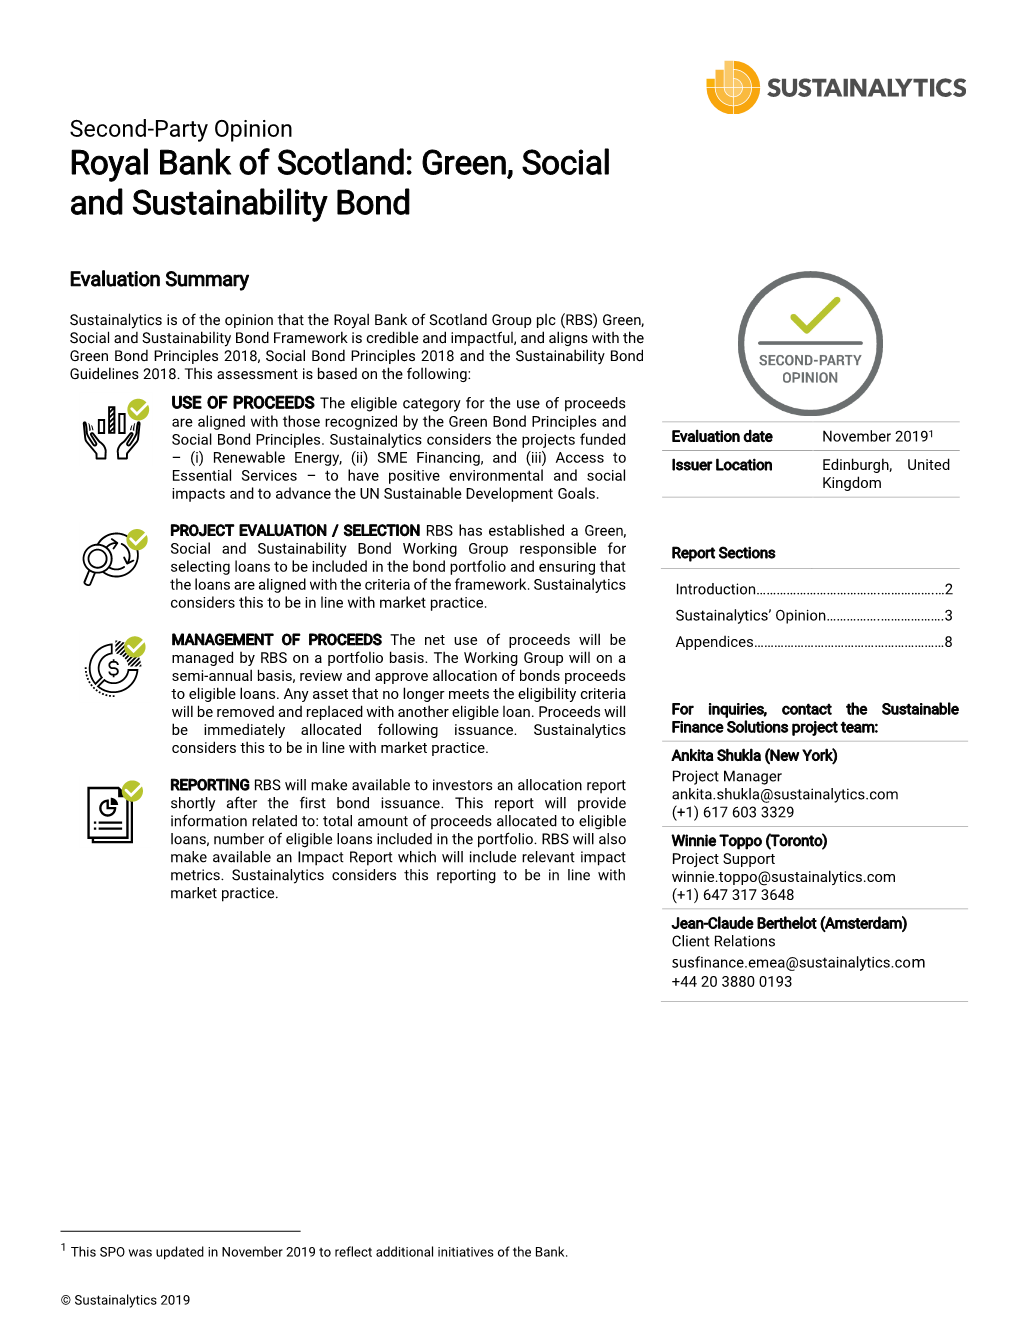 Royal Bank of Scotland: Green, Social and Sustainability Bond